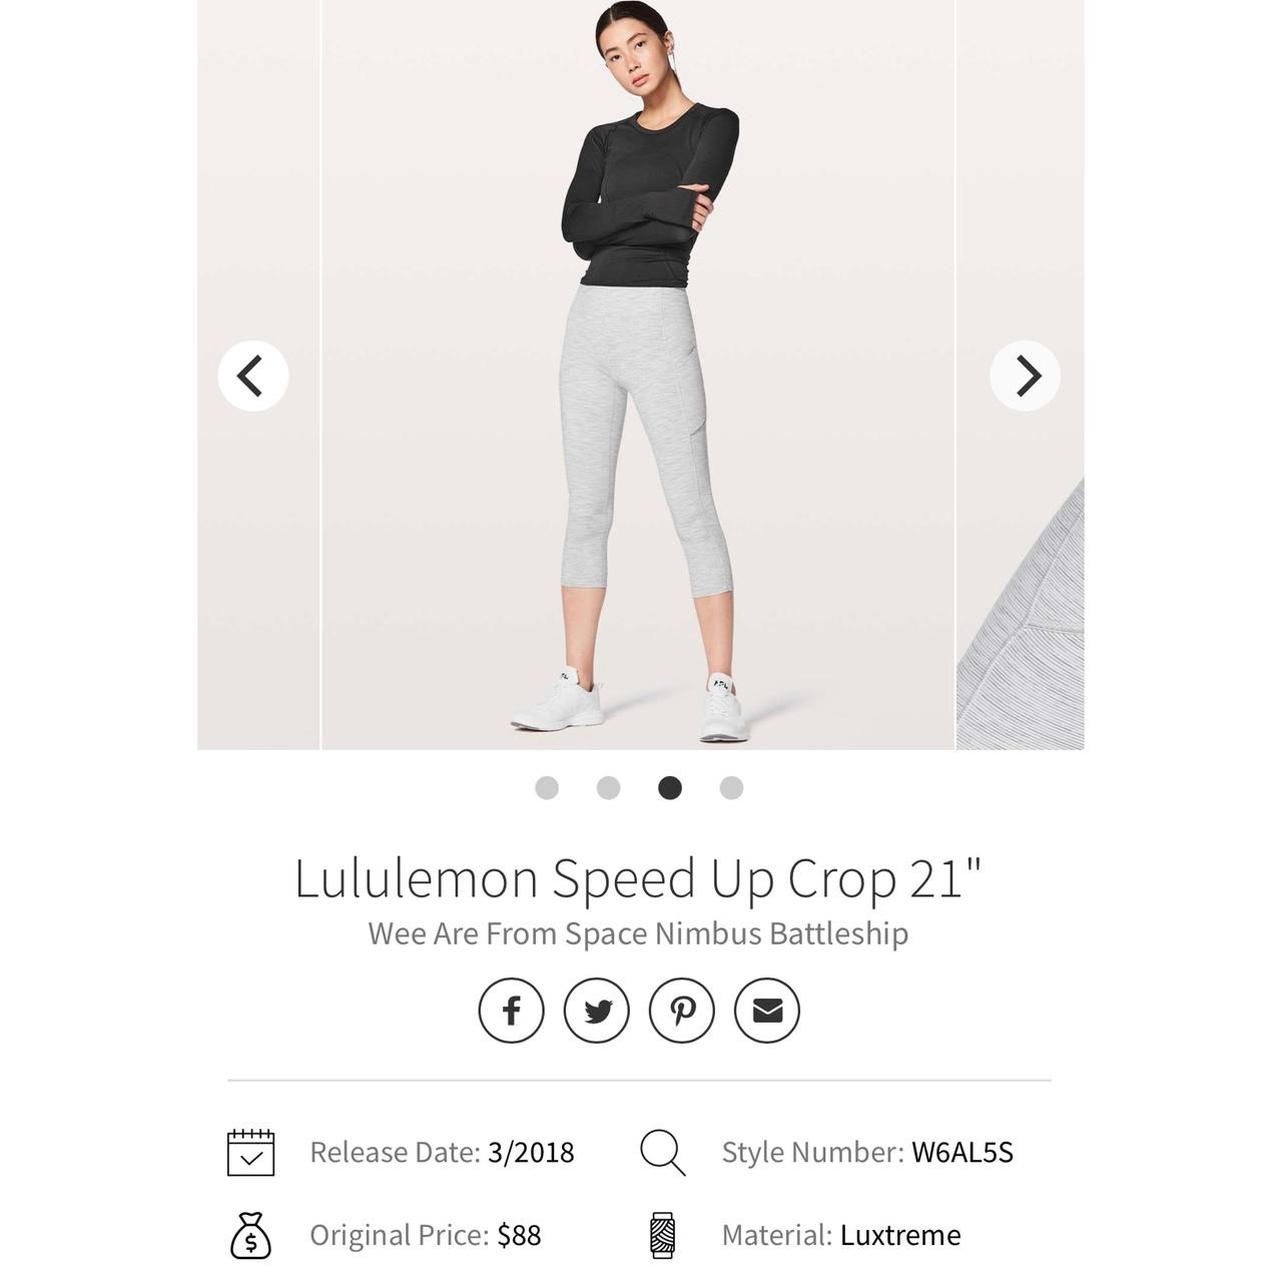 Lululemon Speed Up Crop 21 - Wee Are From Space Nimbus Battleship